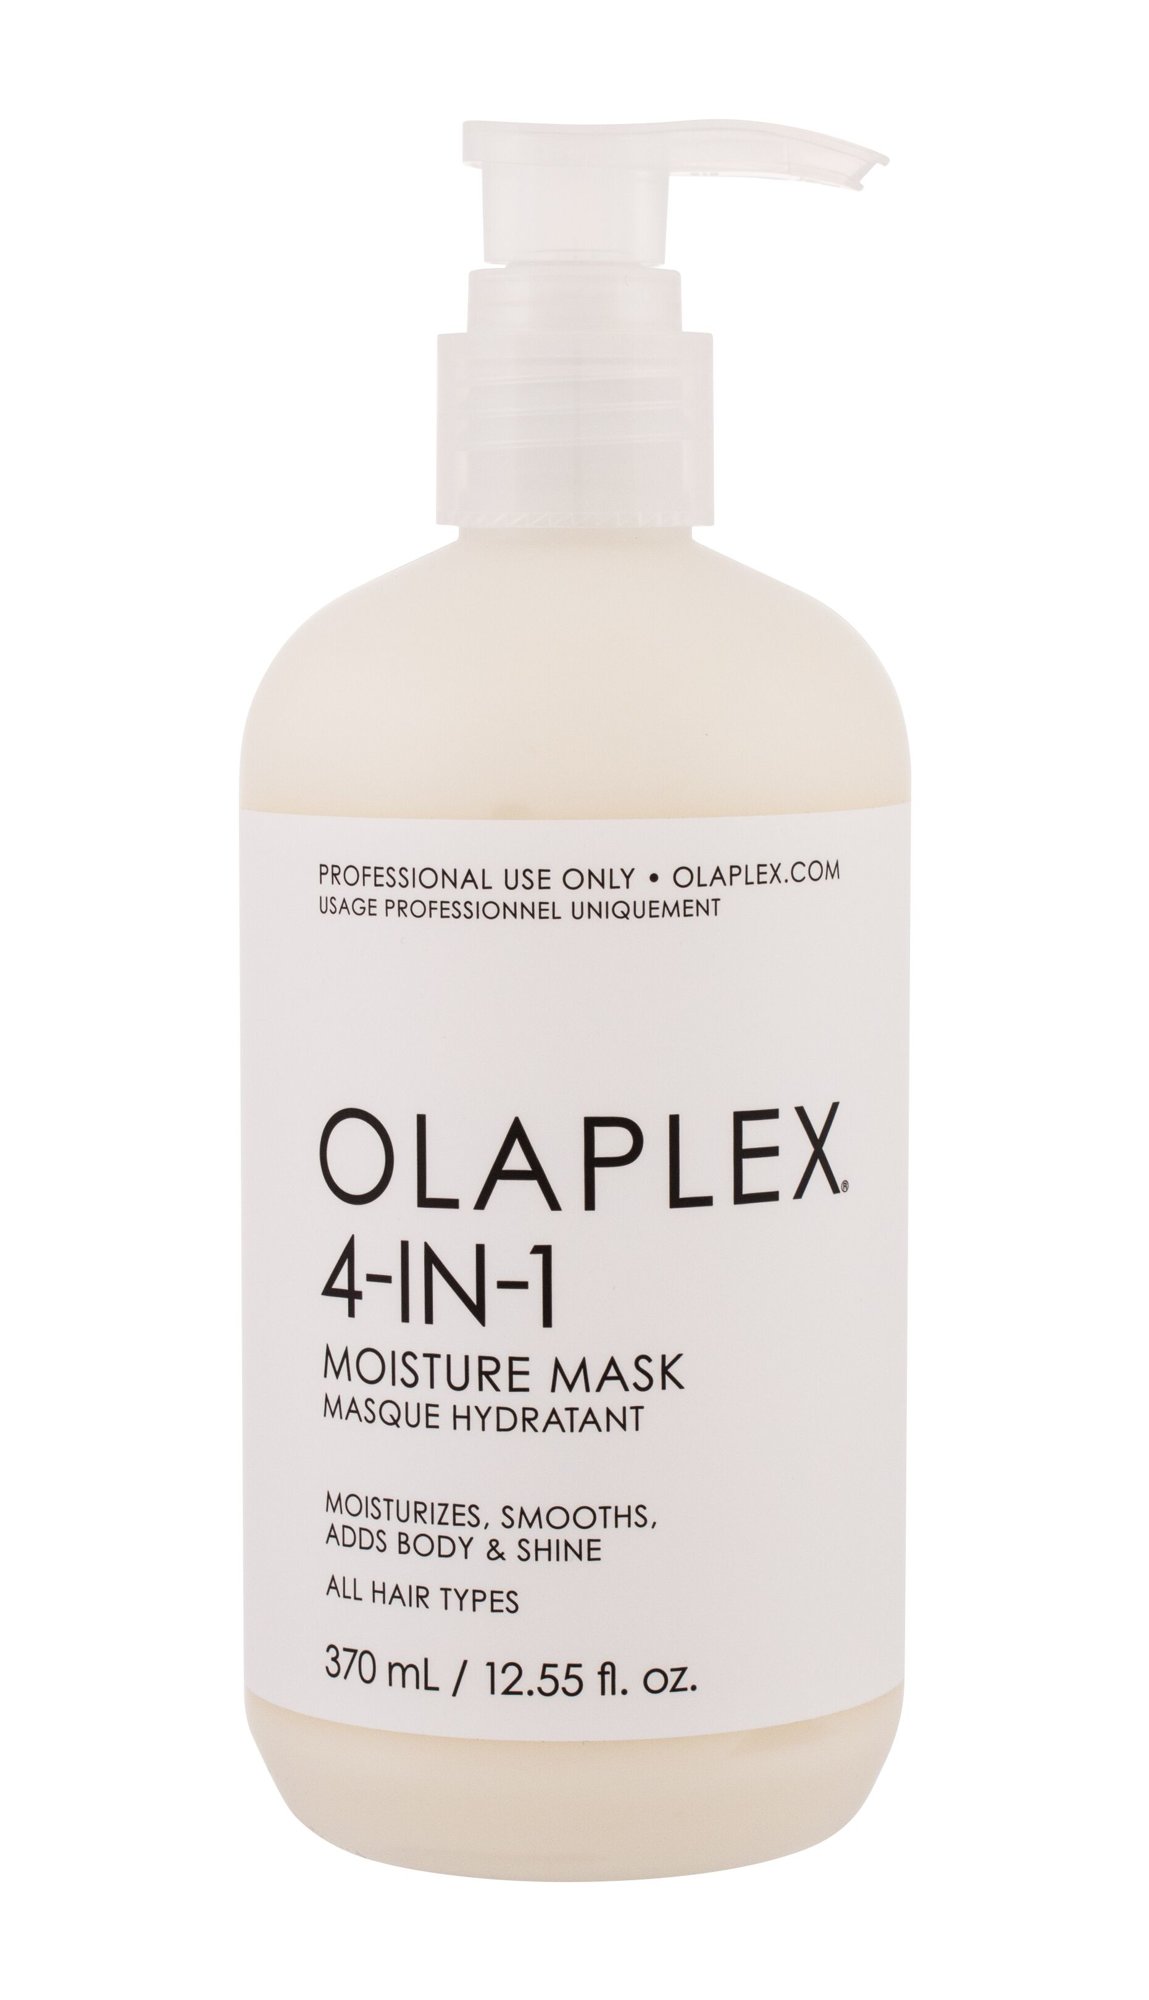 Olaplex 4-IN-1 Moisture Mask plaukų kaukė